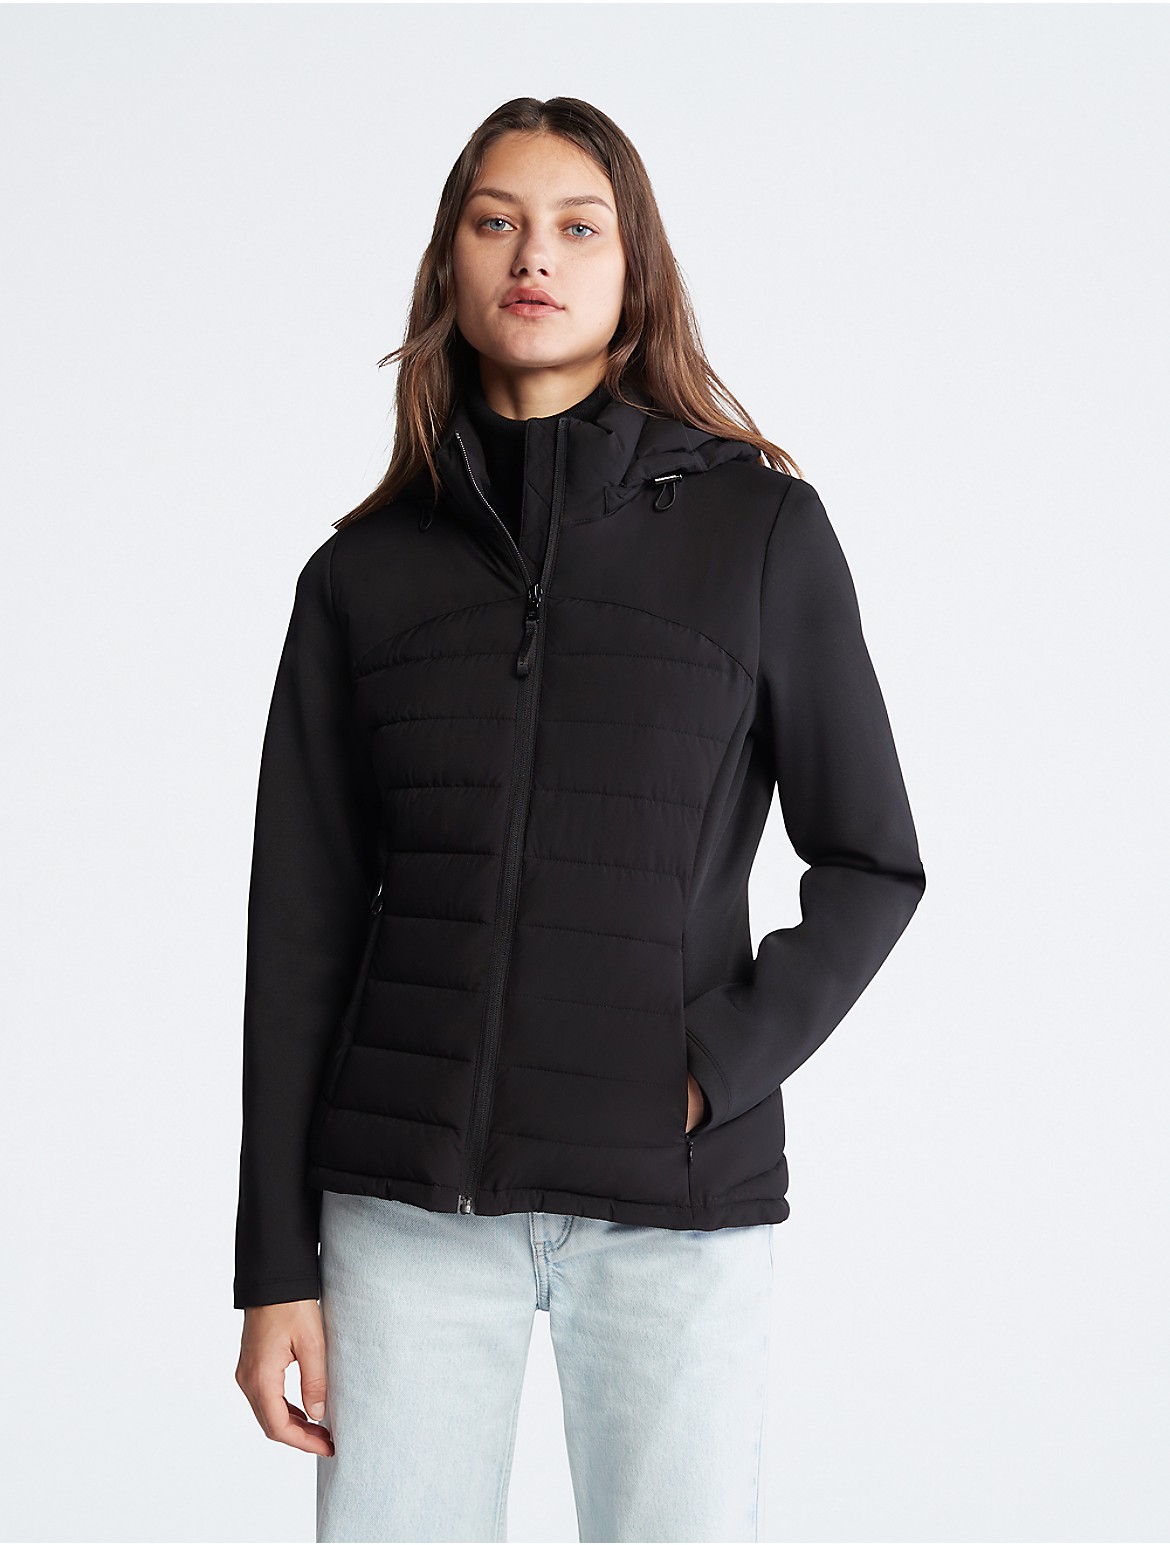 Calvin Klein Women's Mixed Media Puffer Jacket - Black - L